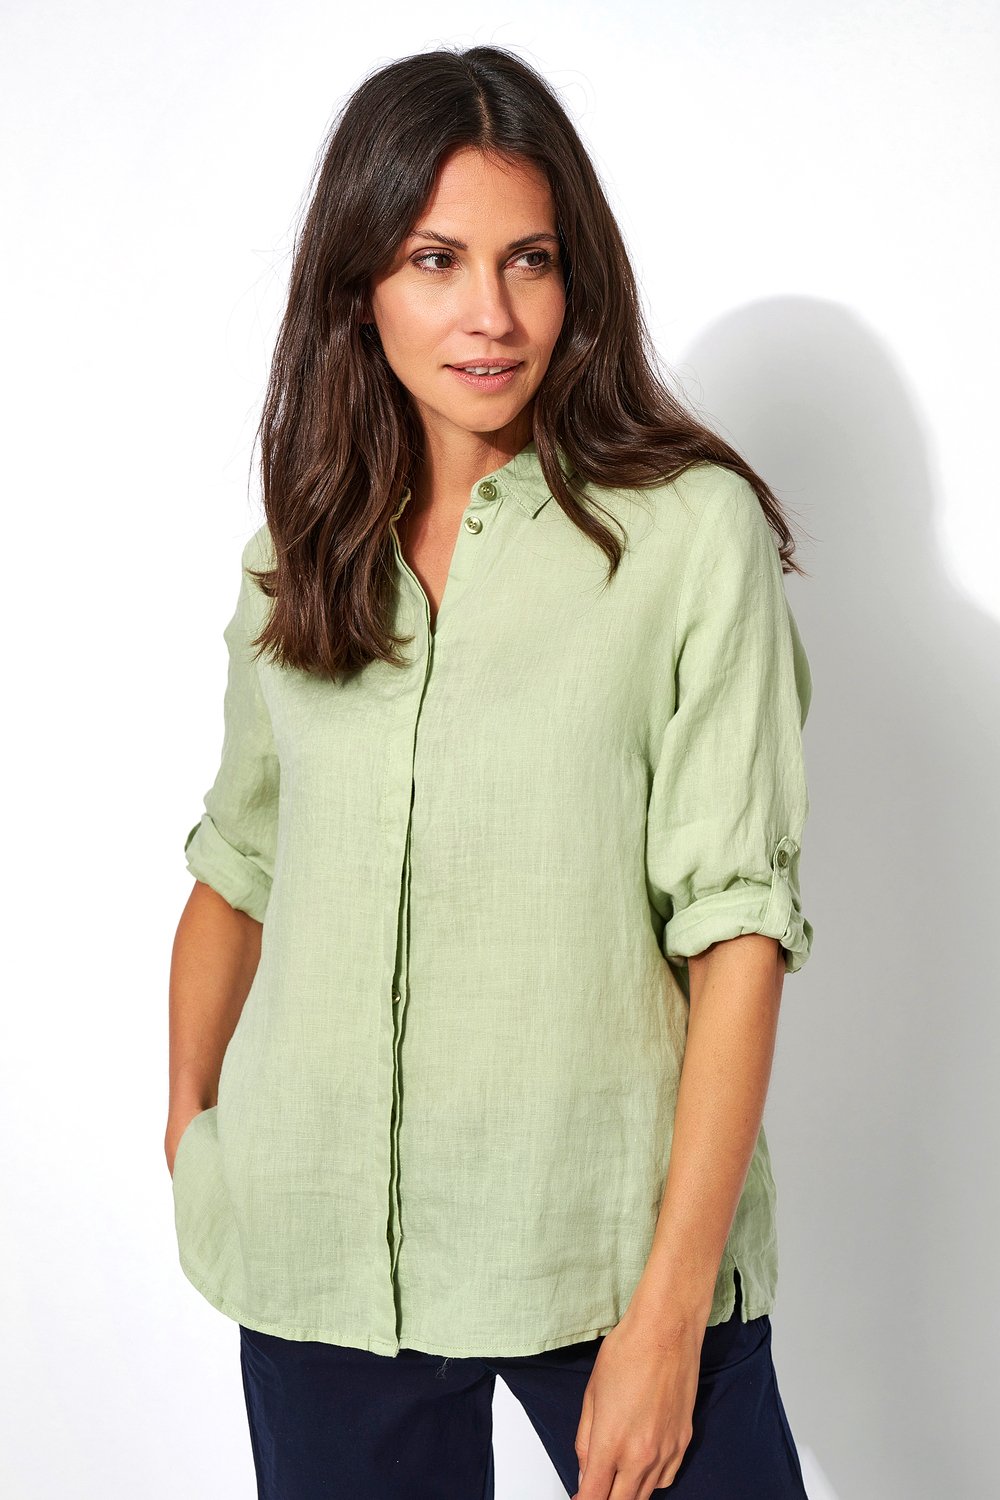 Summery linen blouse | Style »Clay« soft khaki